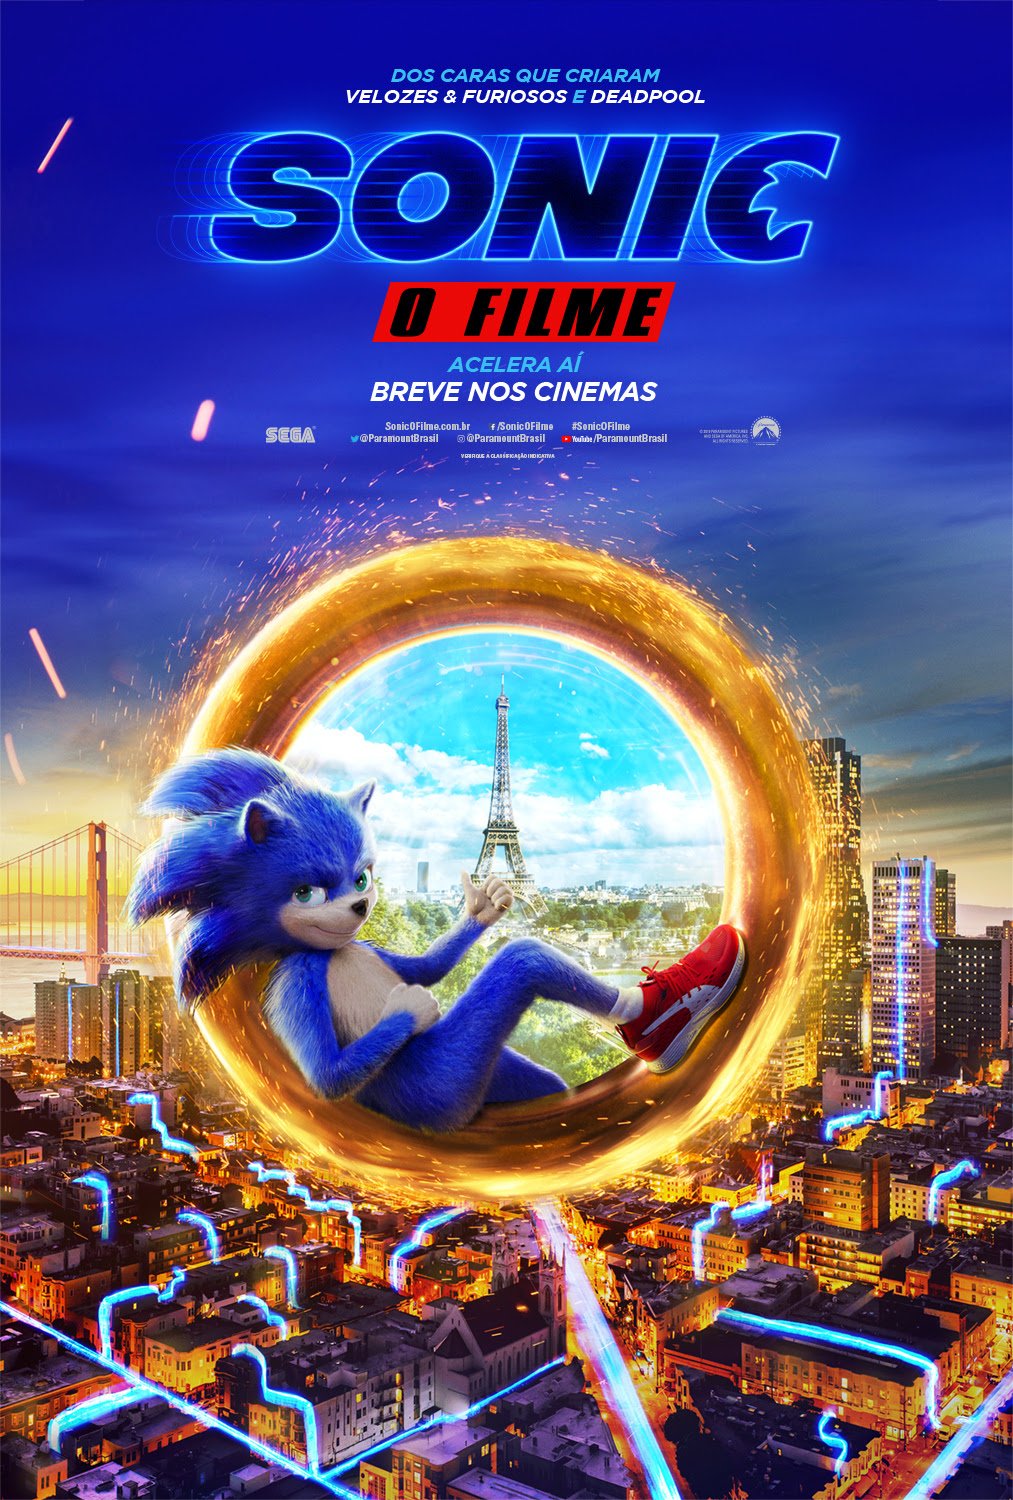 Slideshow: Sonic — O Filme